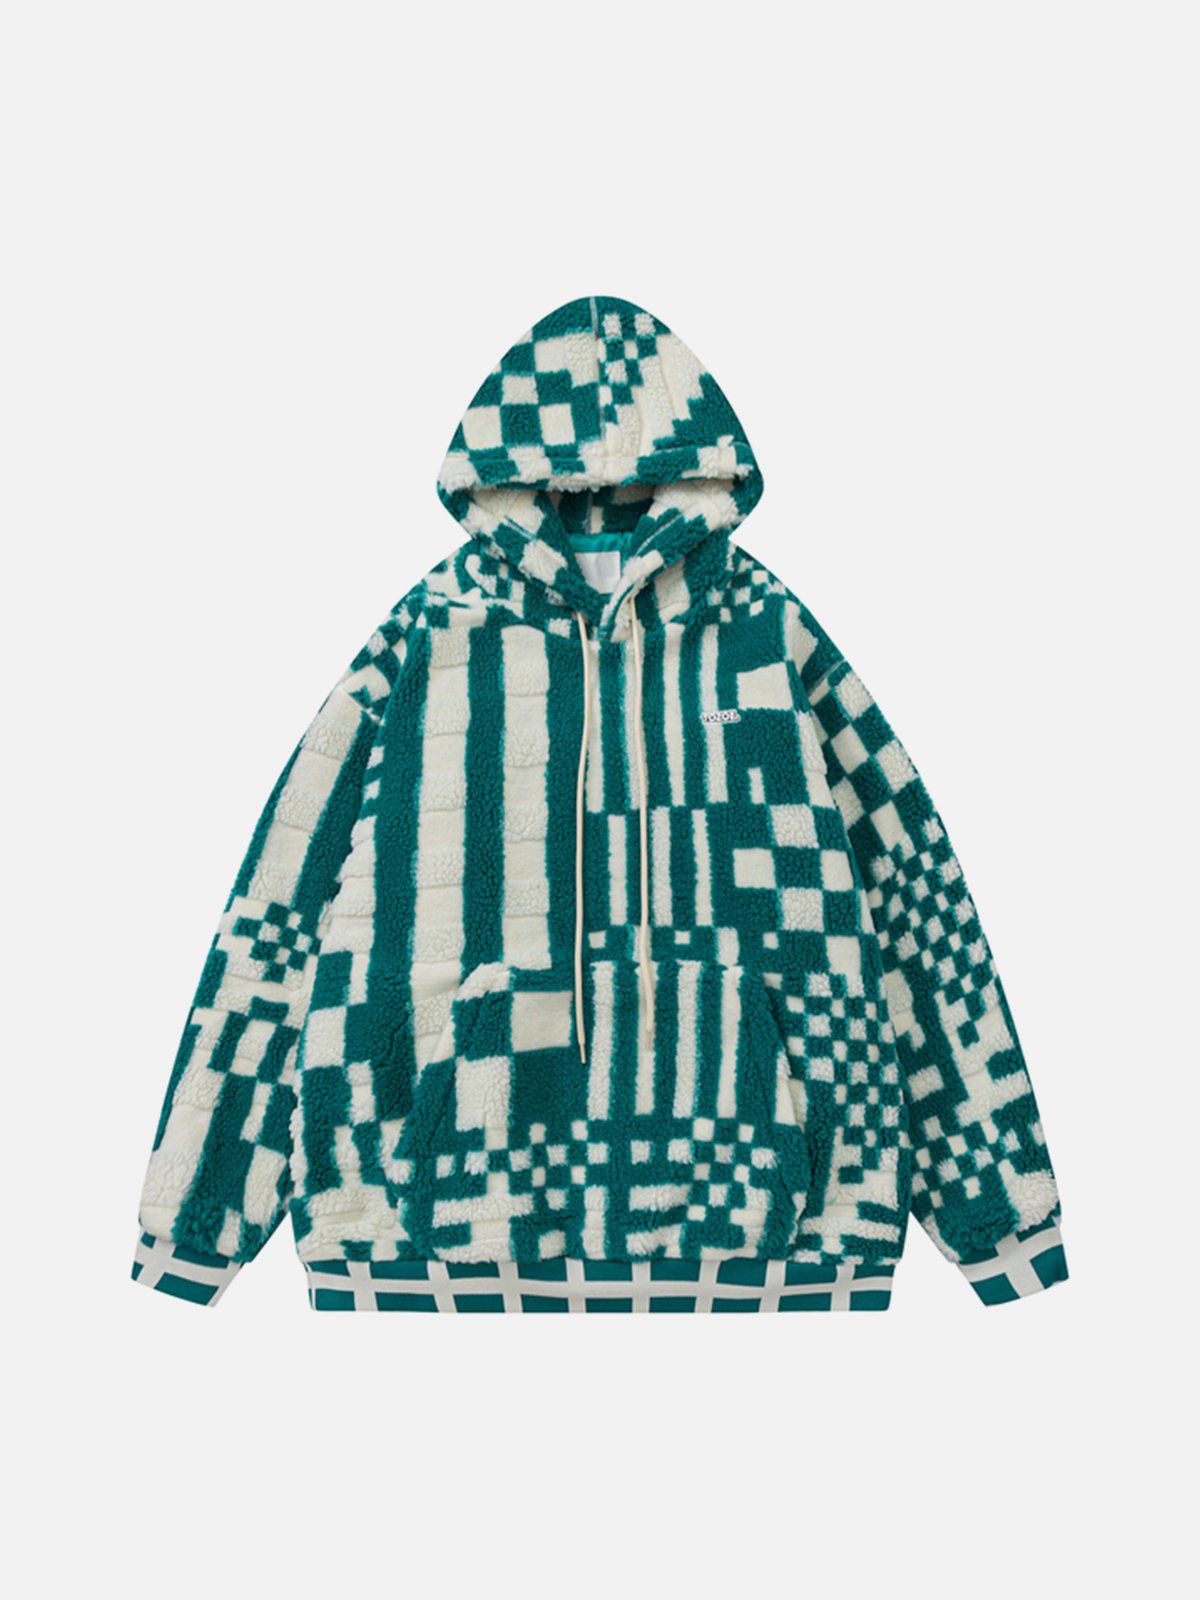 Majesda® - Pixel Stripe Hooded Sherpa Coat outfit ideas, streetwear fashion - majesda.com